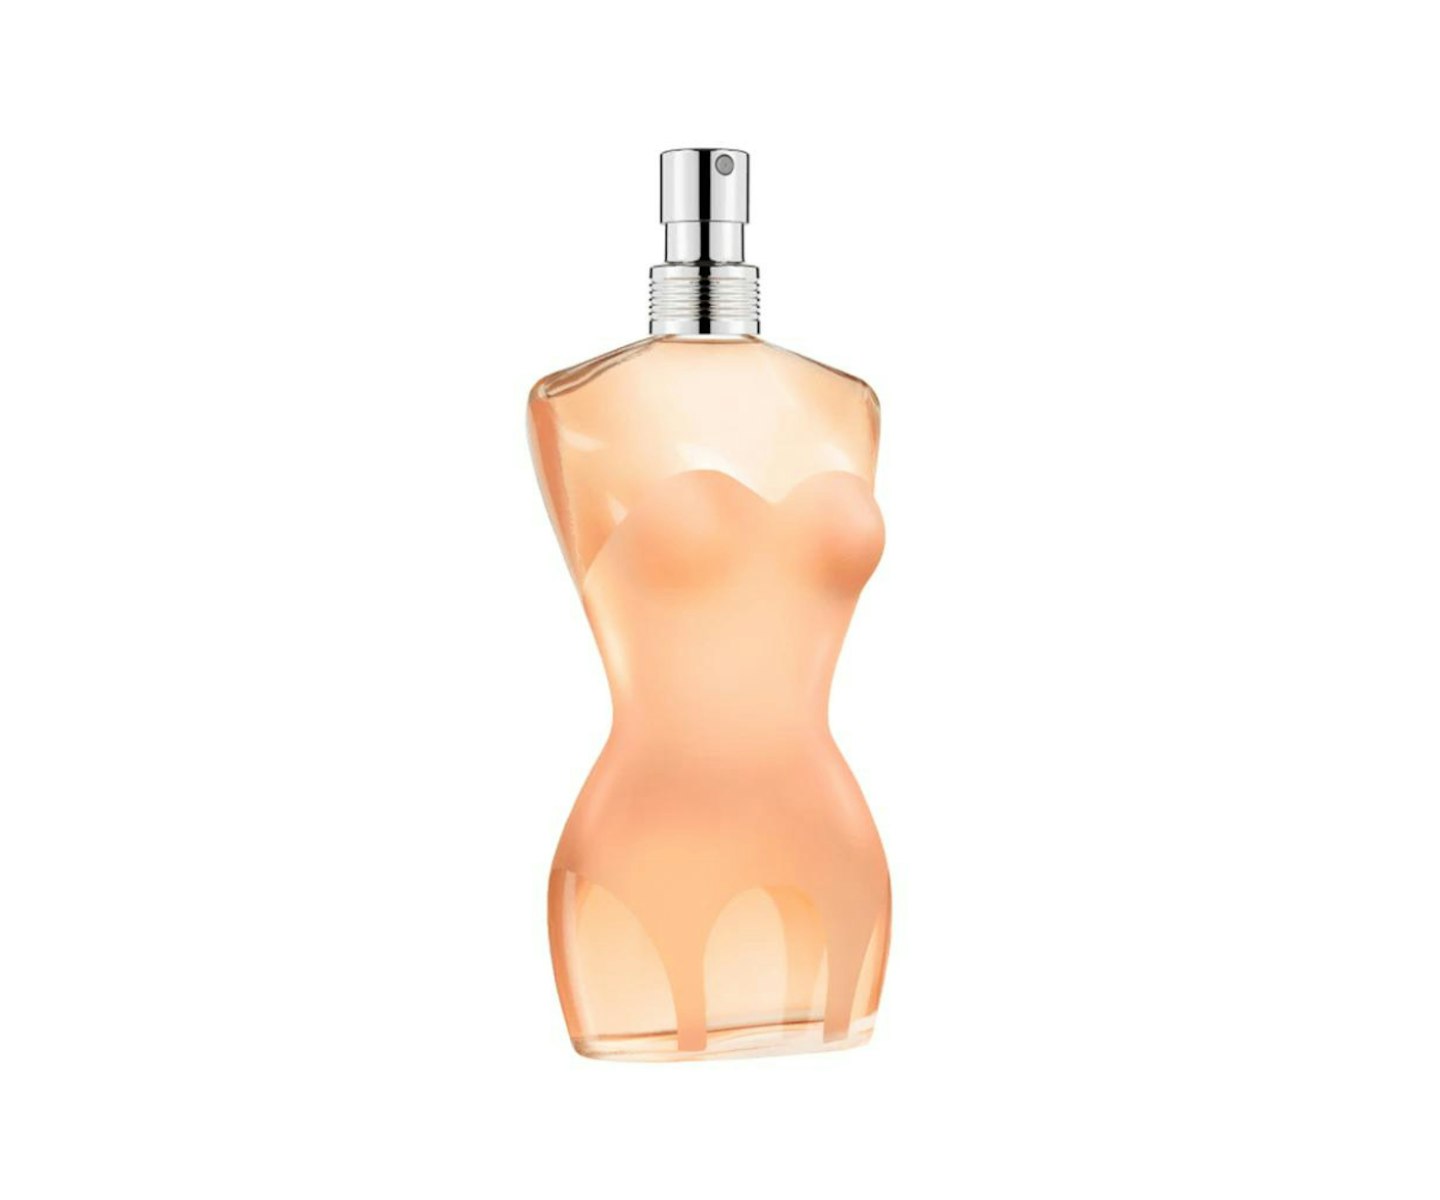 Jean Paul Gaultier Classique Eau De Toilette Women's Perfume Spray 30ml